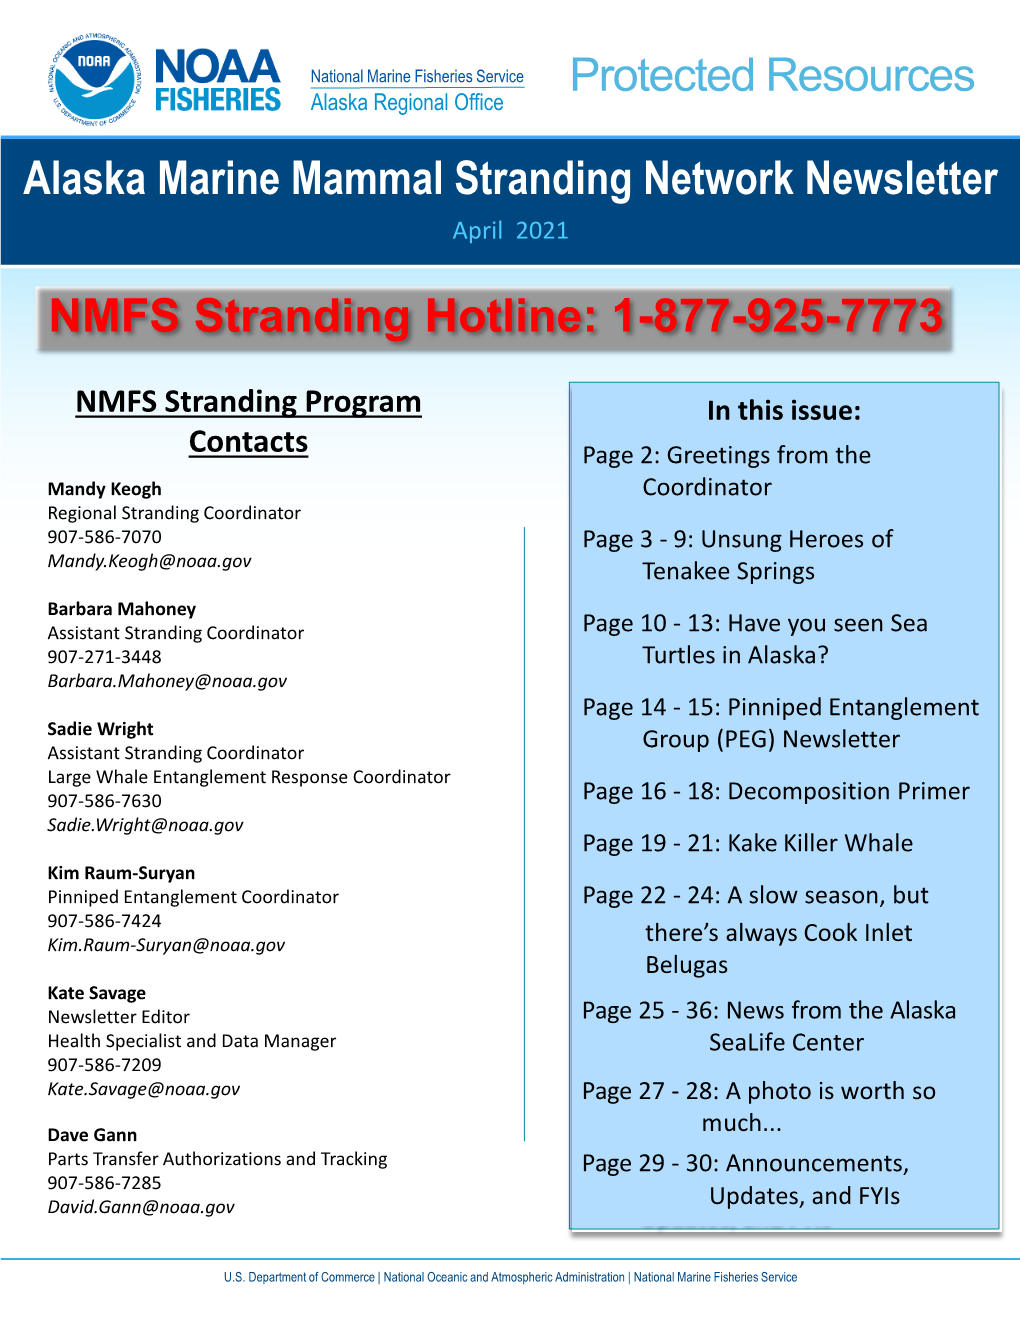 Alaska Marine Mammal Stranding Network Newsletter April 2021